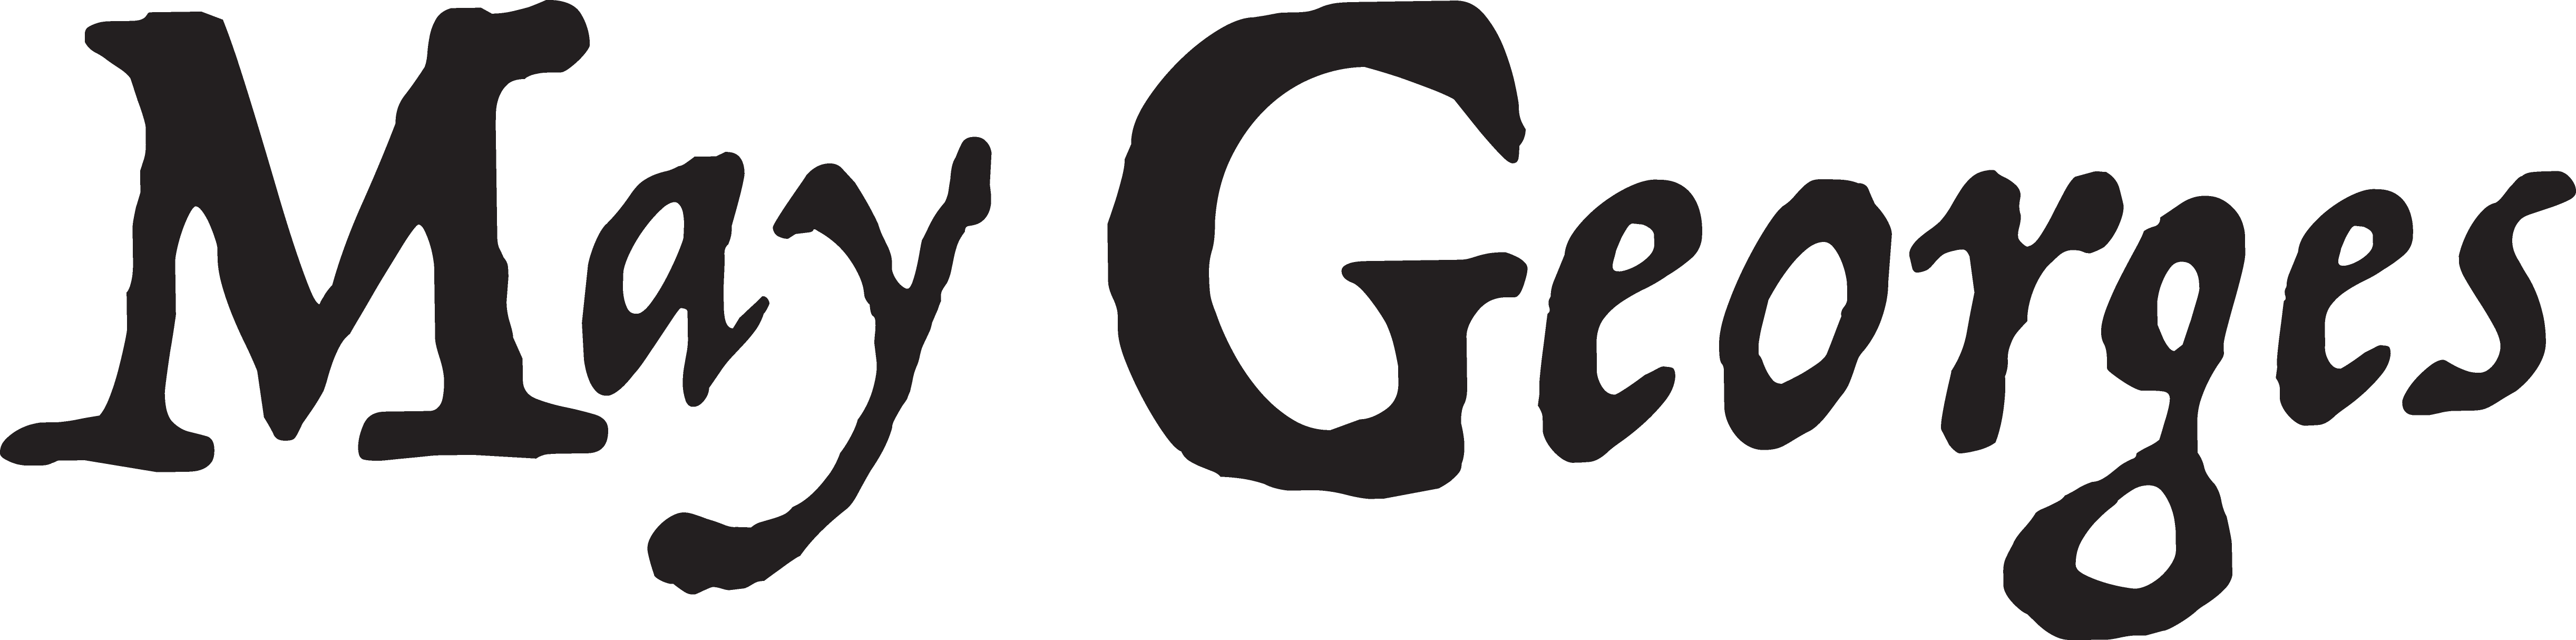 DTR web logo SVGAsset 1dpi